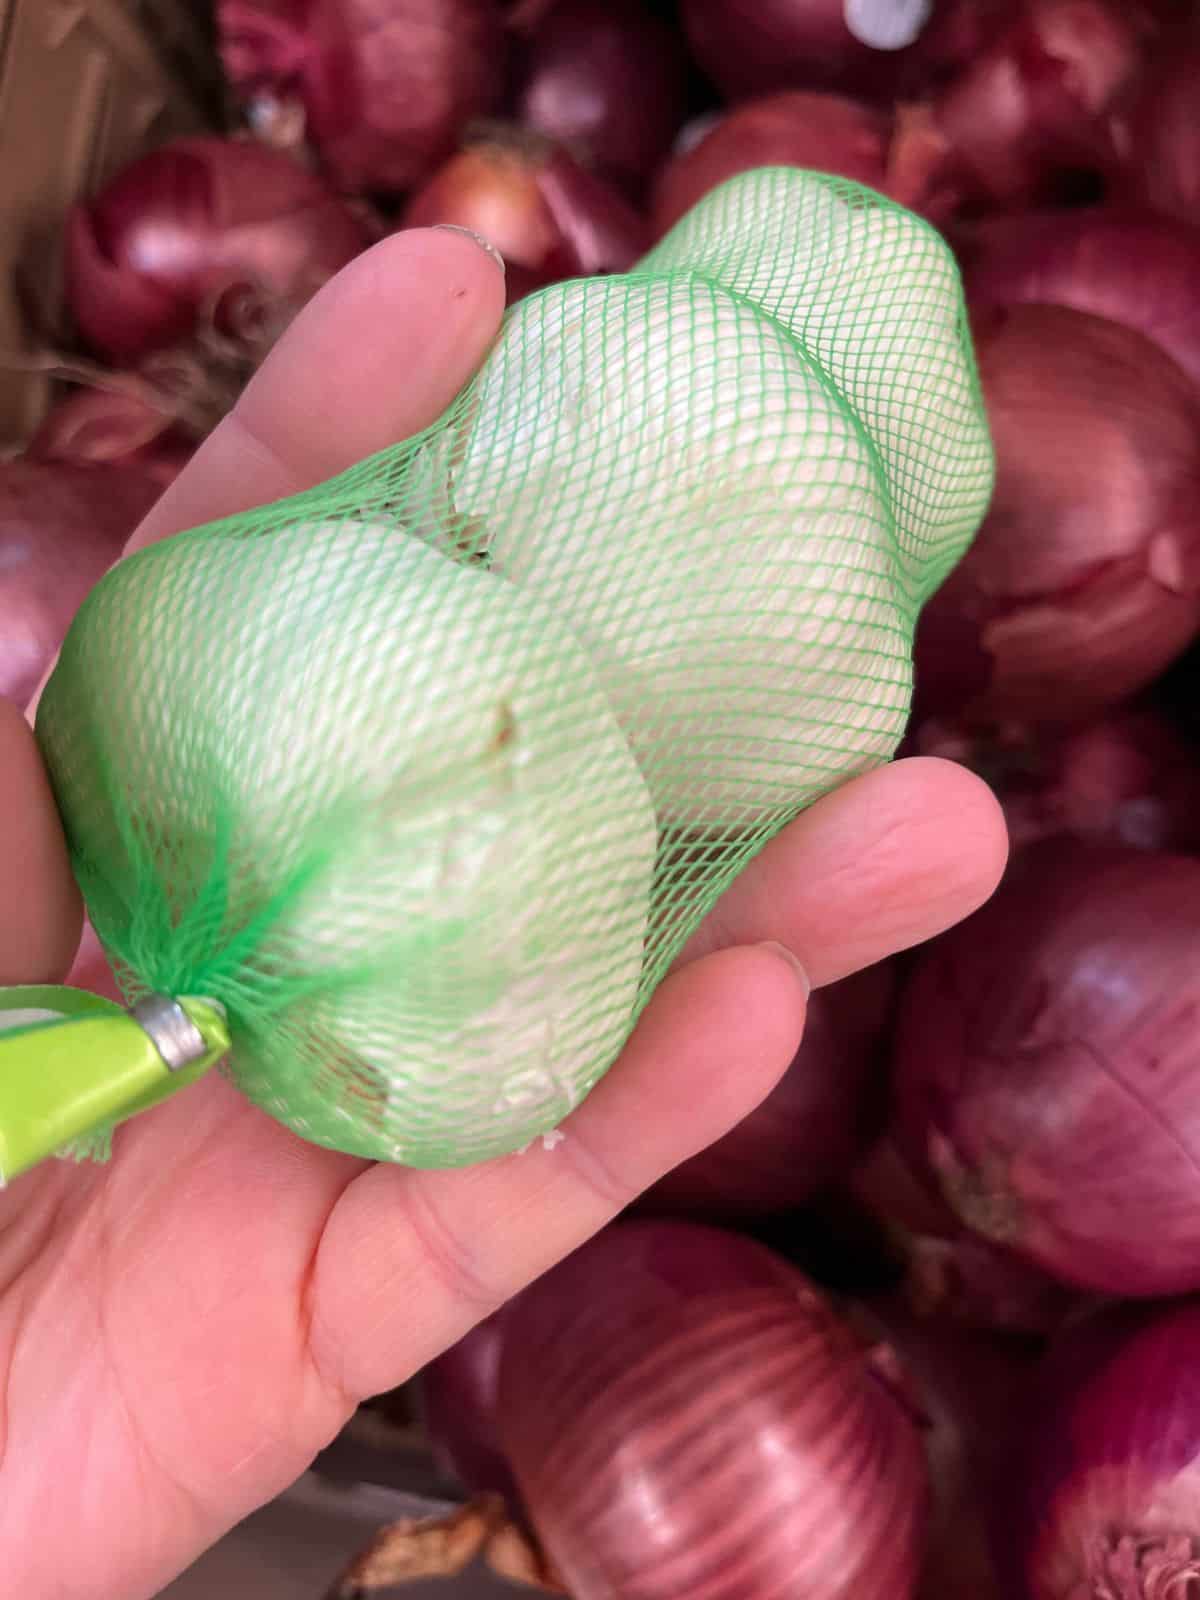 Garlic in grocery store bundles